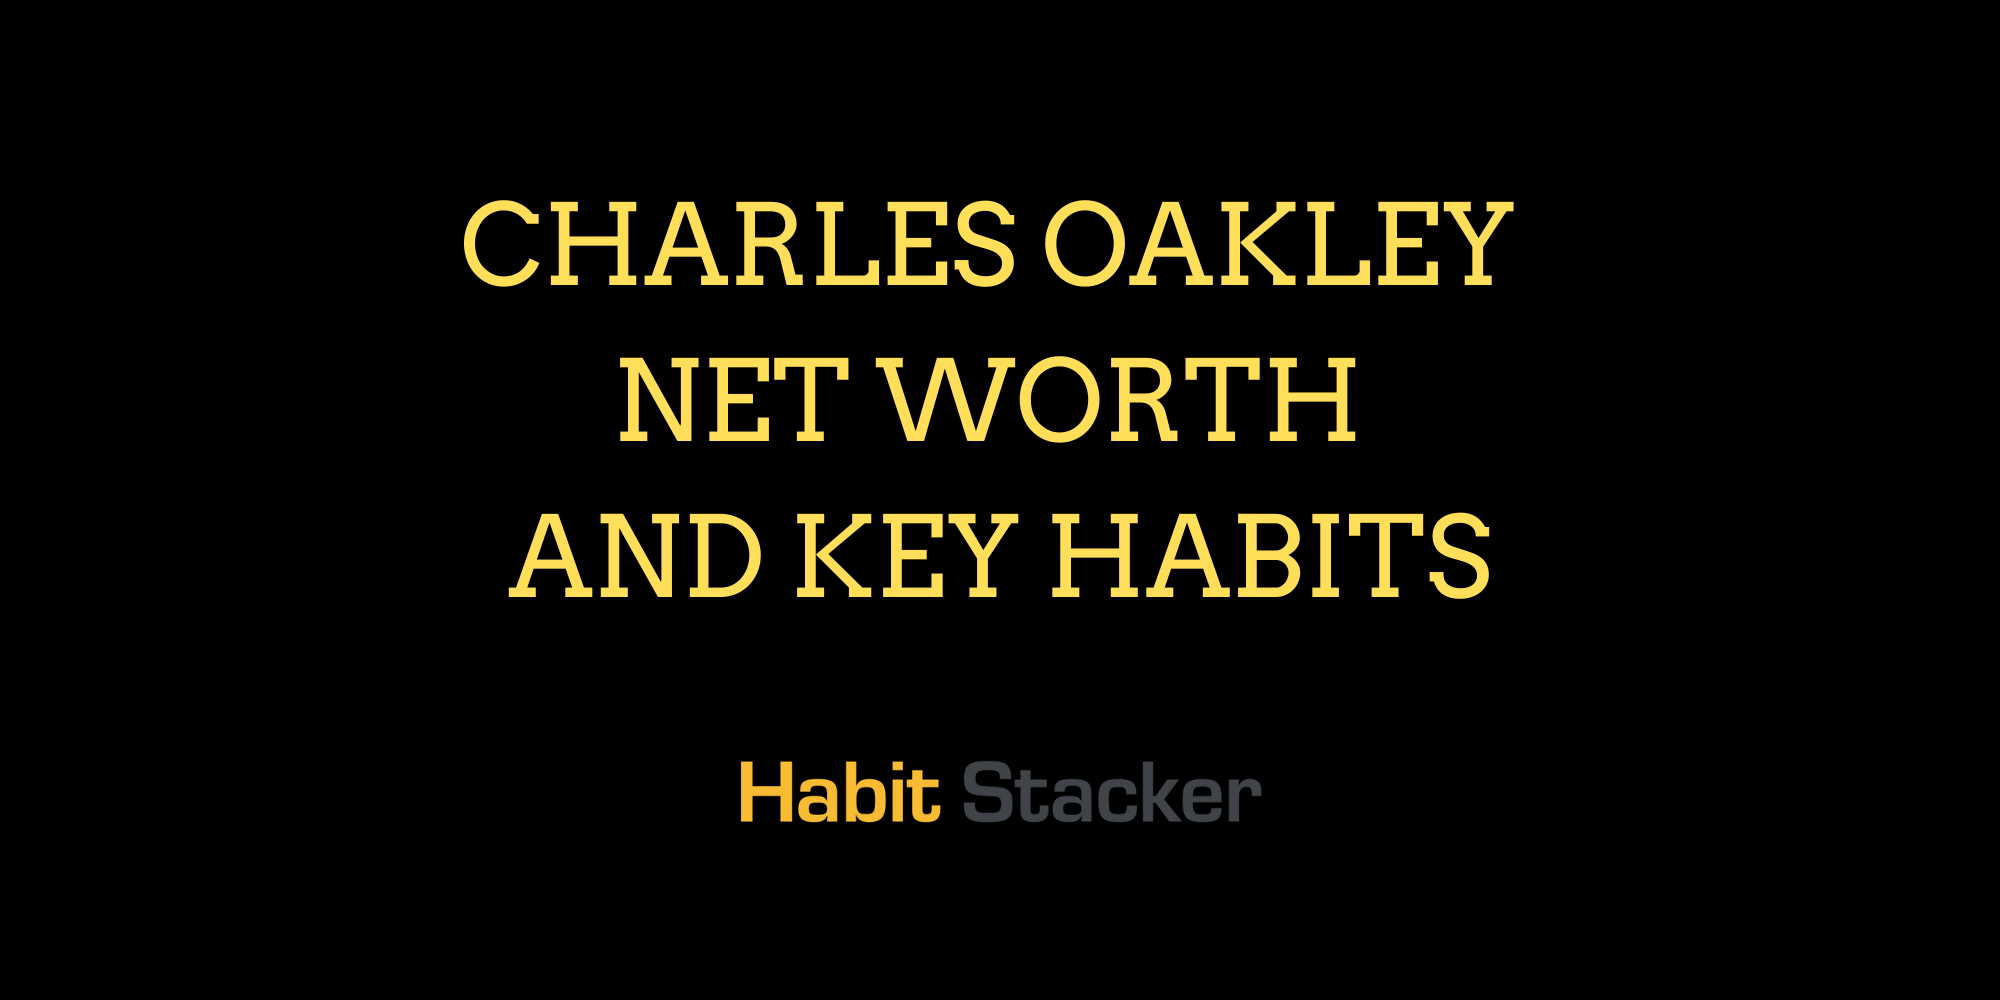 Charles Oakley Net Worth and Key Habits